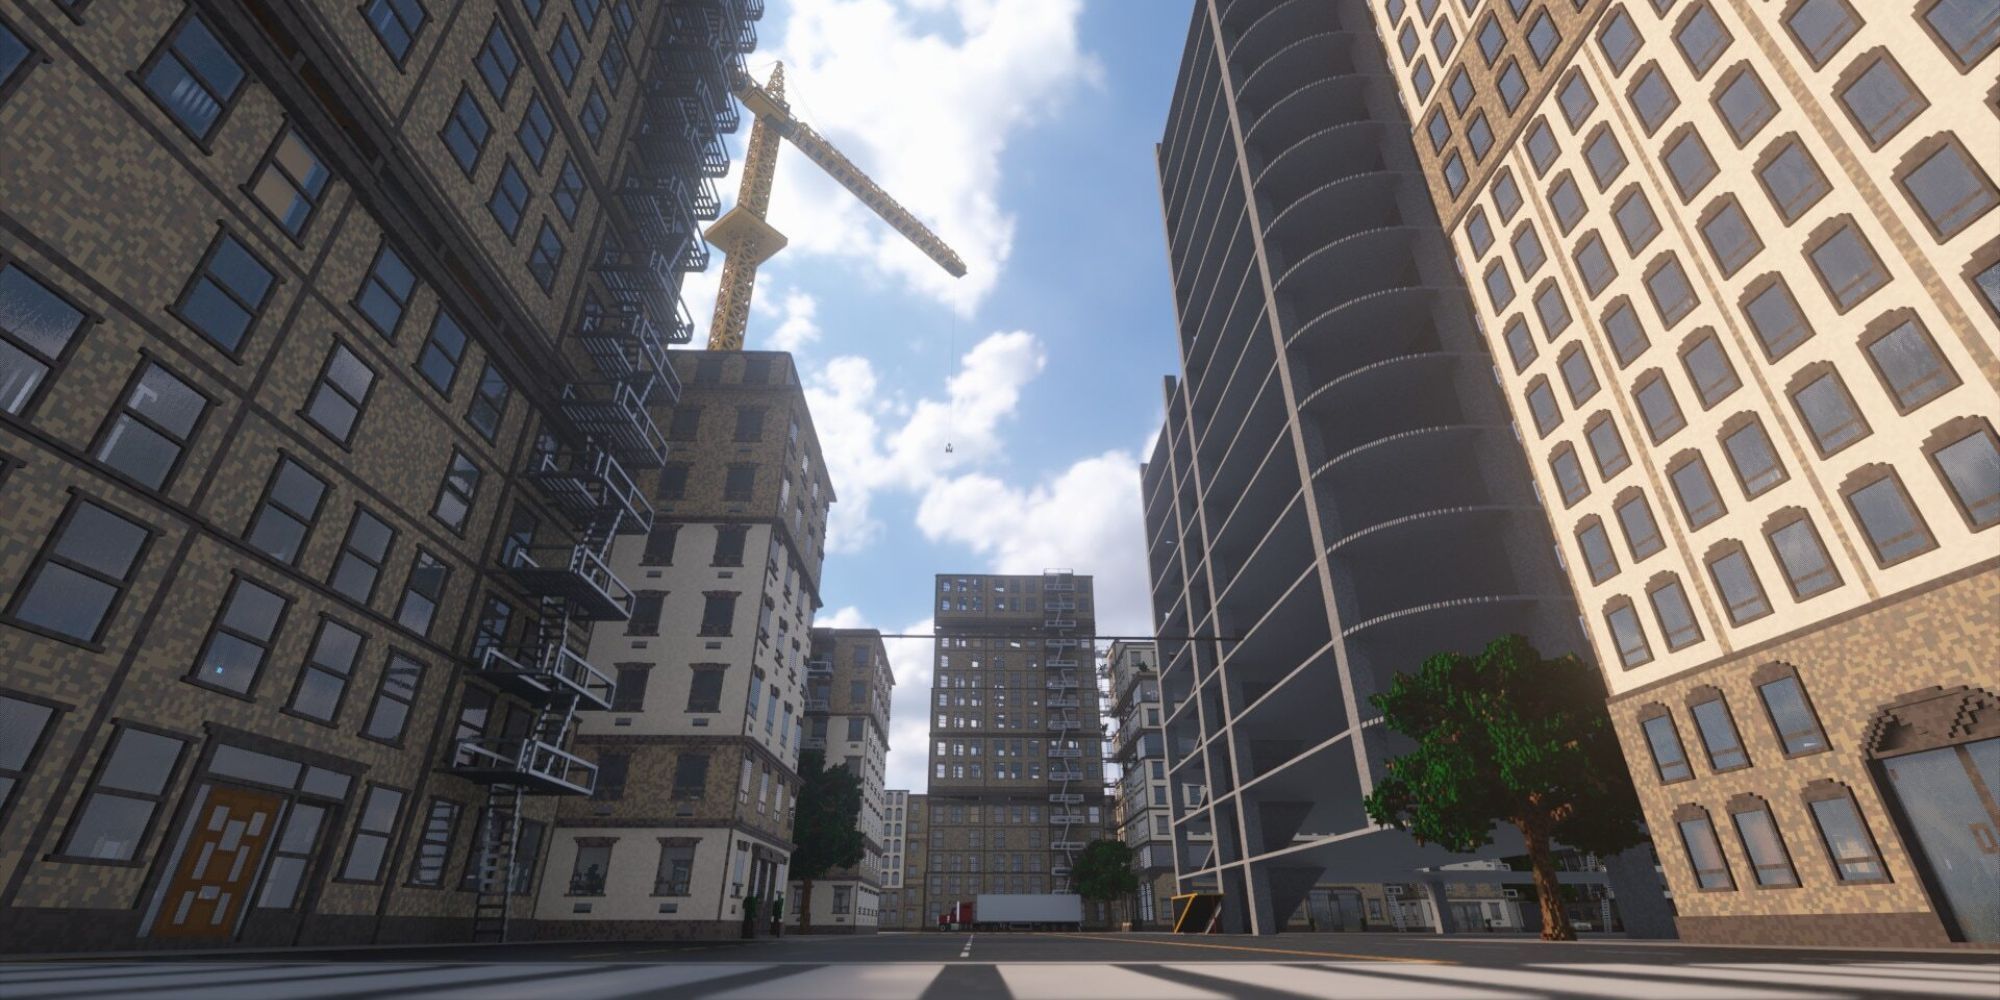 Teardown-Voxel-Plaza-Buildings-With-Crane-Overhead